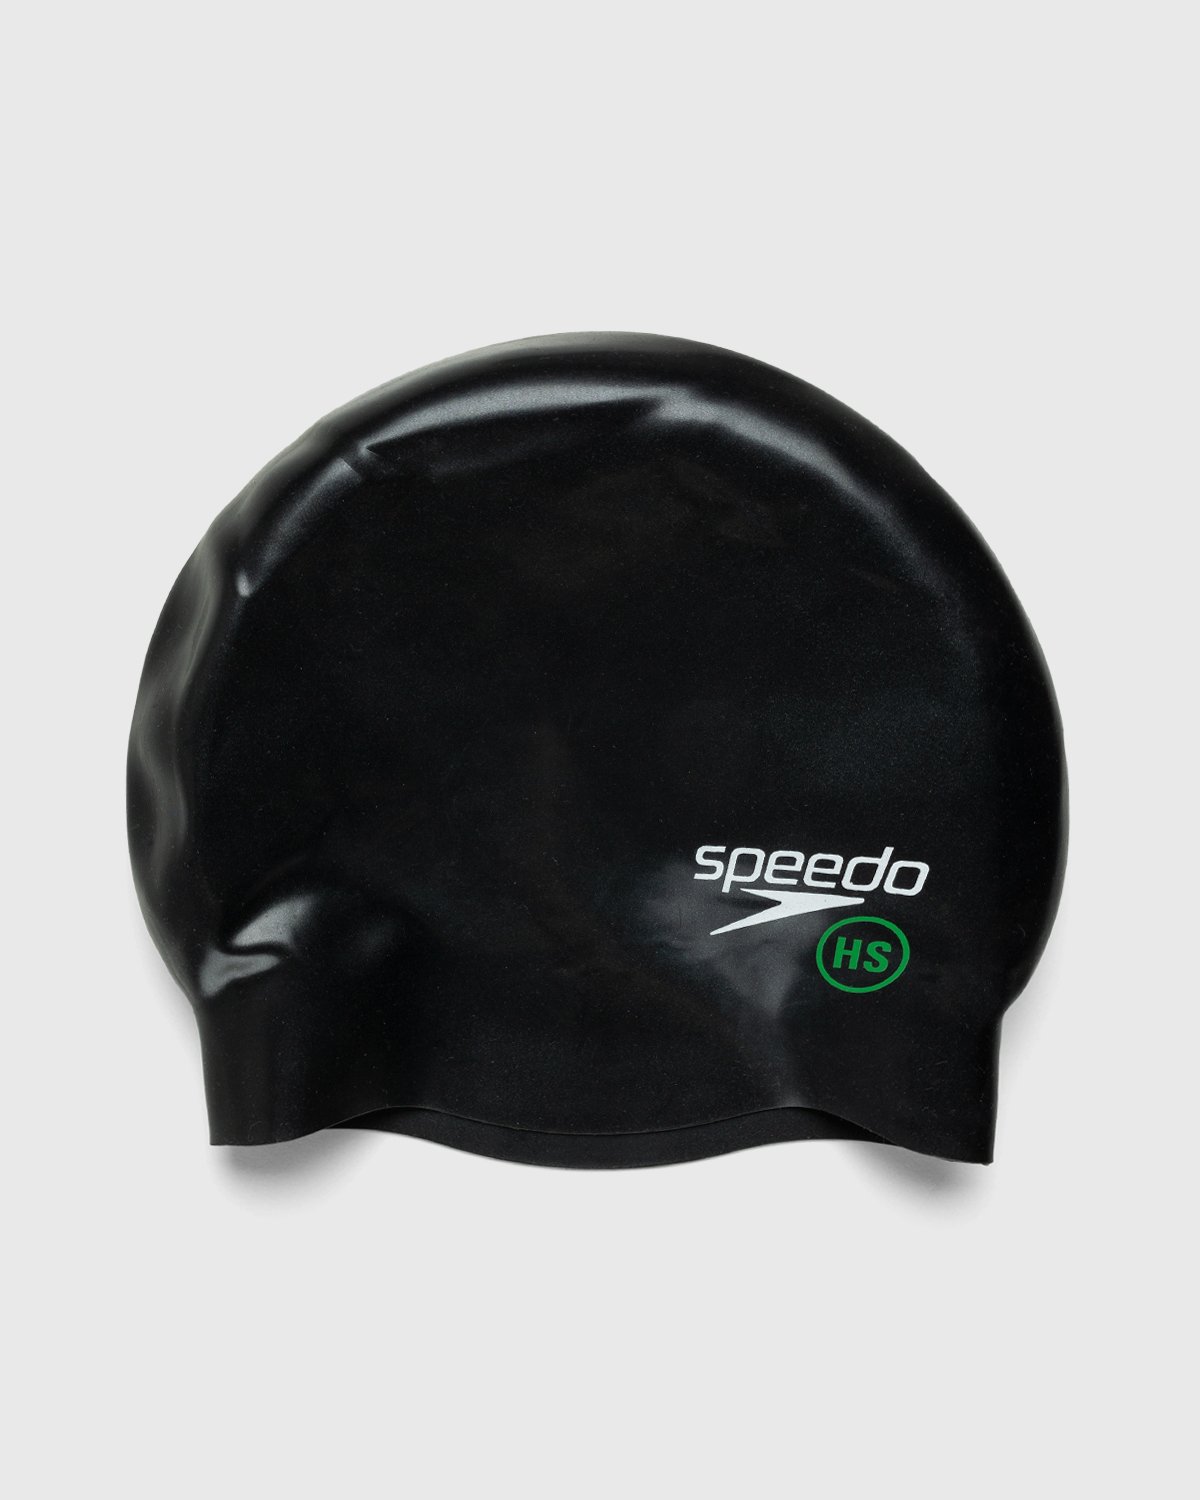 Speedo x Highsnobiety - HS Sports Determination Silicone Swim Cap Black - Lifestyle - Black - Image 1